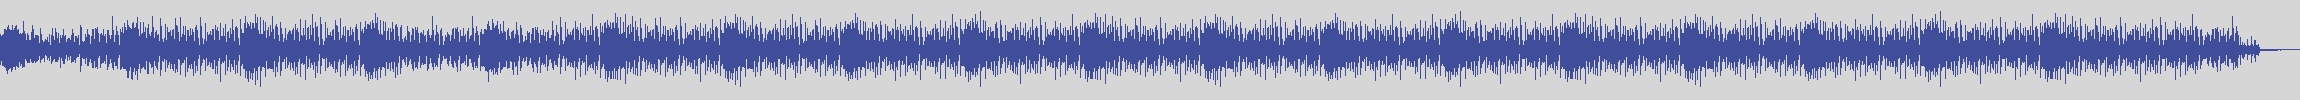 nf_boyz_records [NFY063] Antigua Blue - Blue Comodo [Deep Ocean Mix] audio wave form